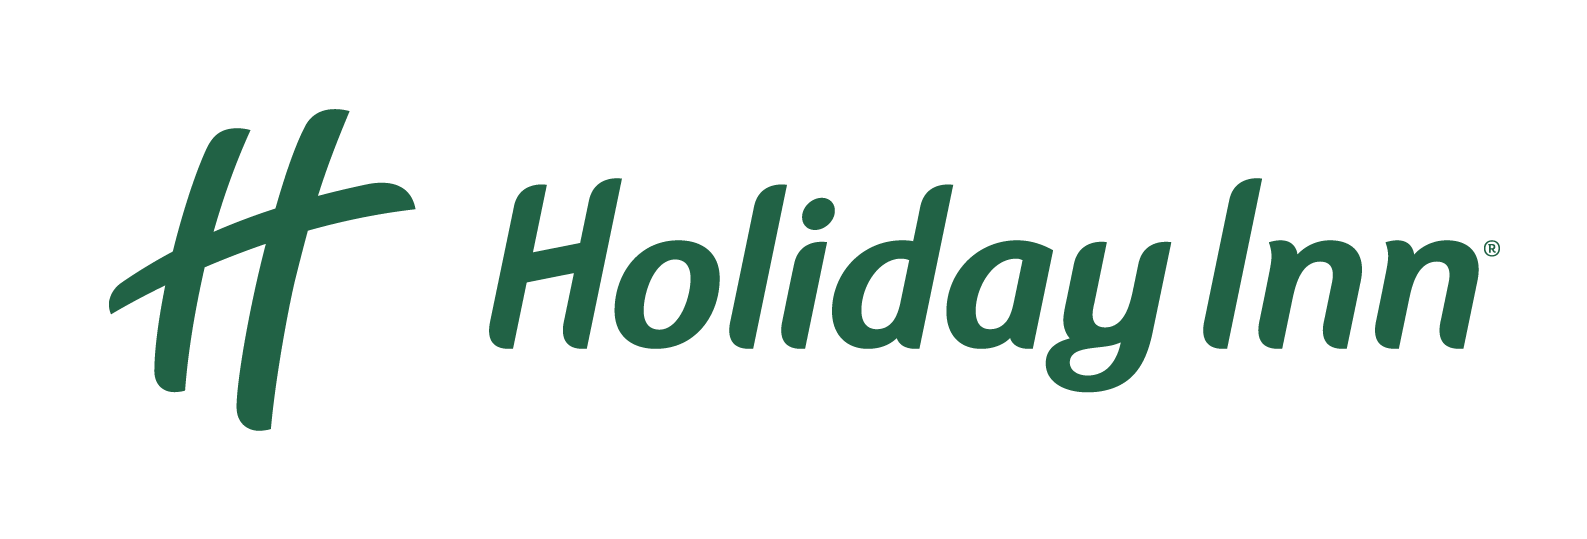 Holiday-Inn-โลโก้-ไม่ผ่านการรับรอง-digital-green-rgb-horz-2023-en